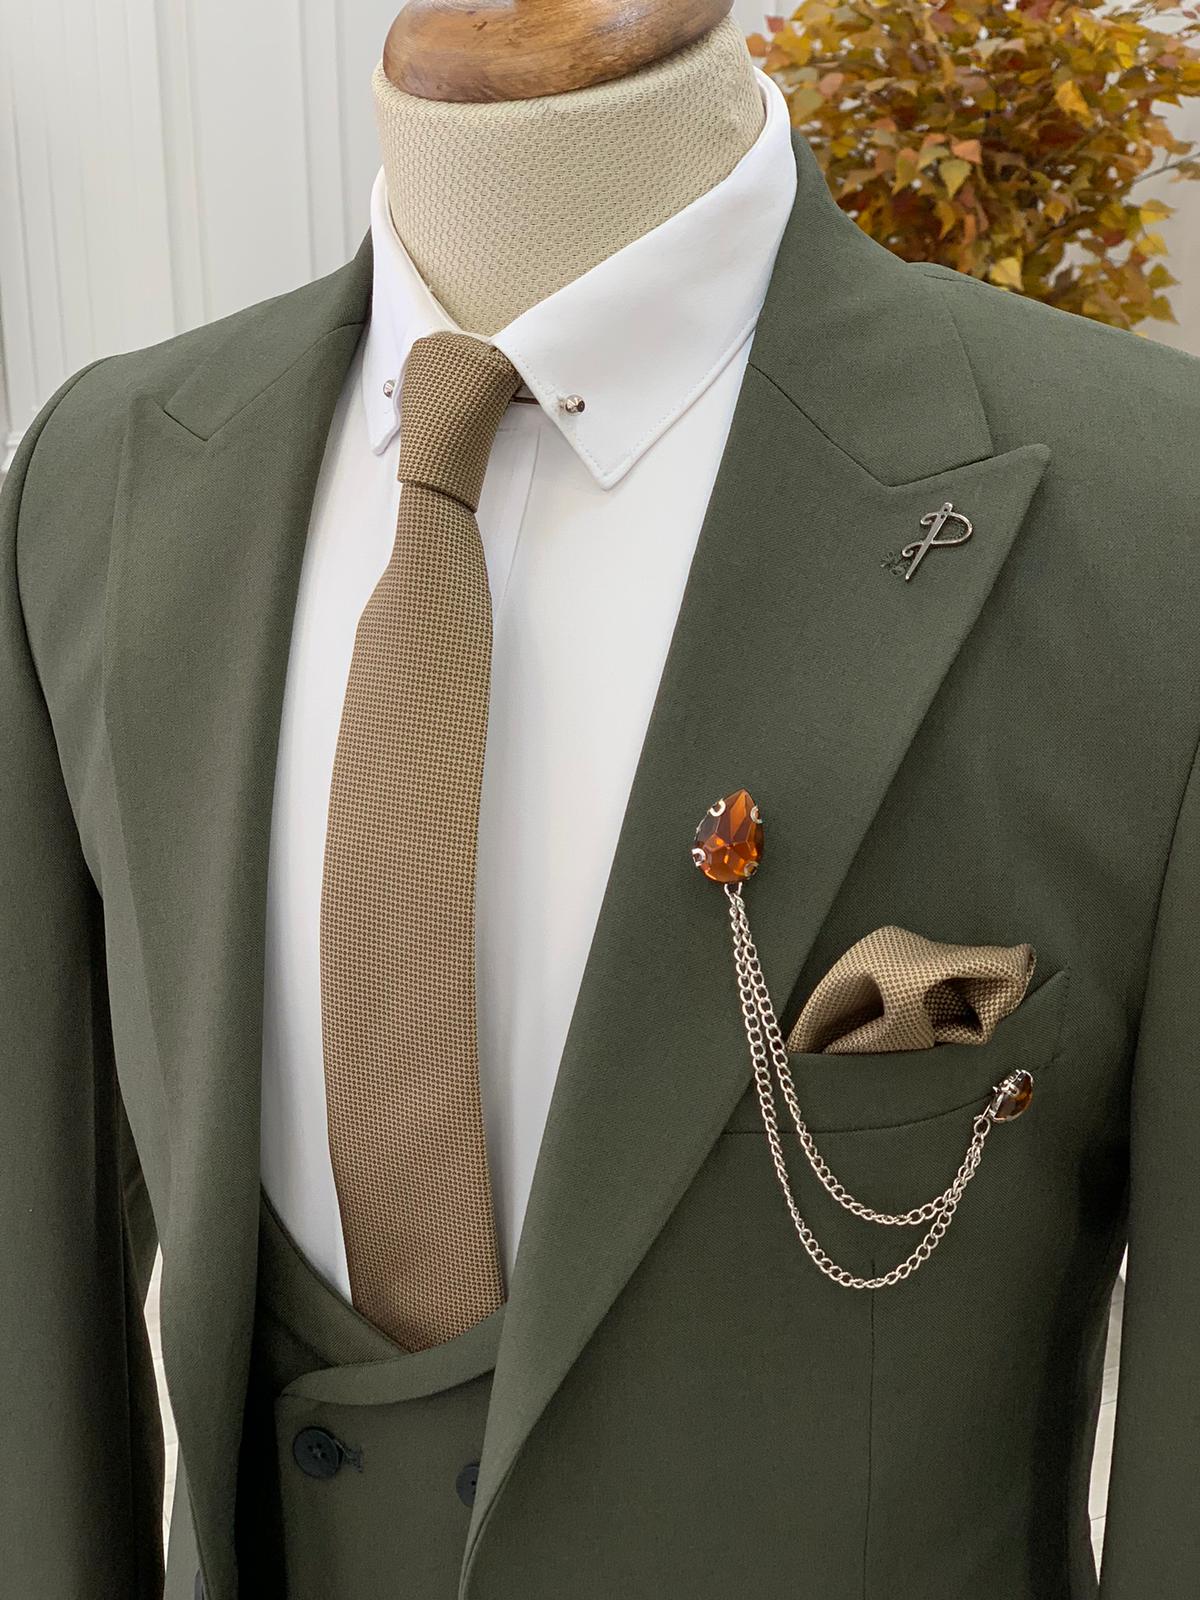 Green Slim Fit Peak Lapel Suit for Men by Bespokedailyshop | Free Worldwide Shipping